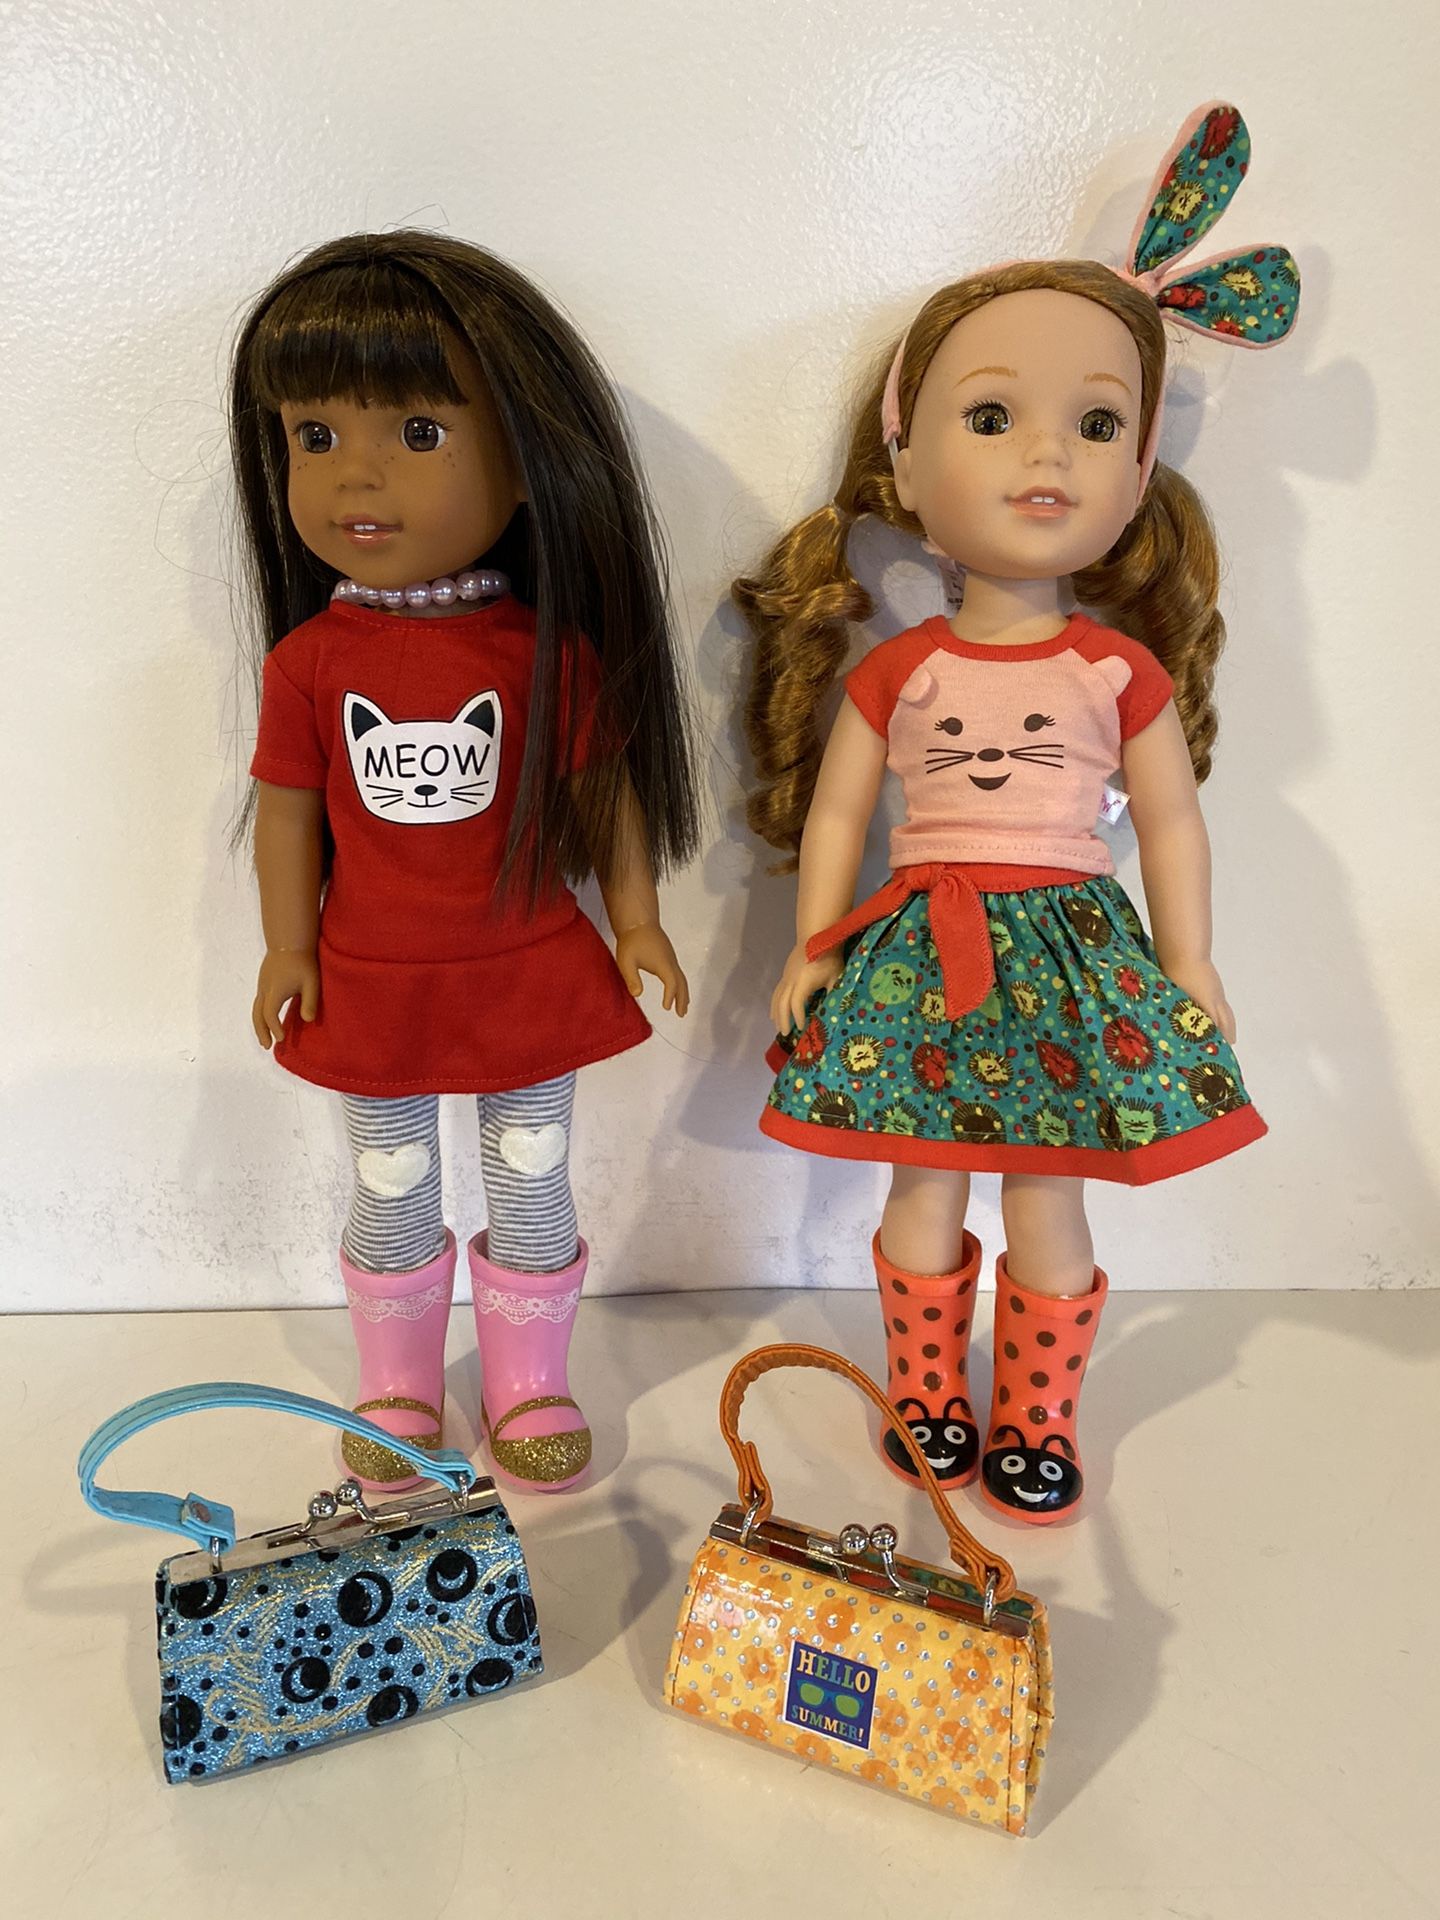 2 American Girl WellieWishers and Ashlyn dolls, plus 2 purses